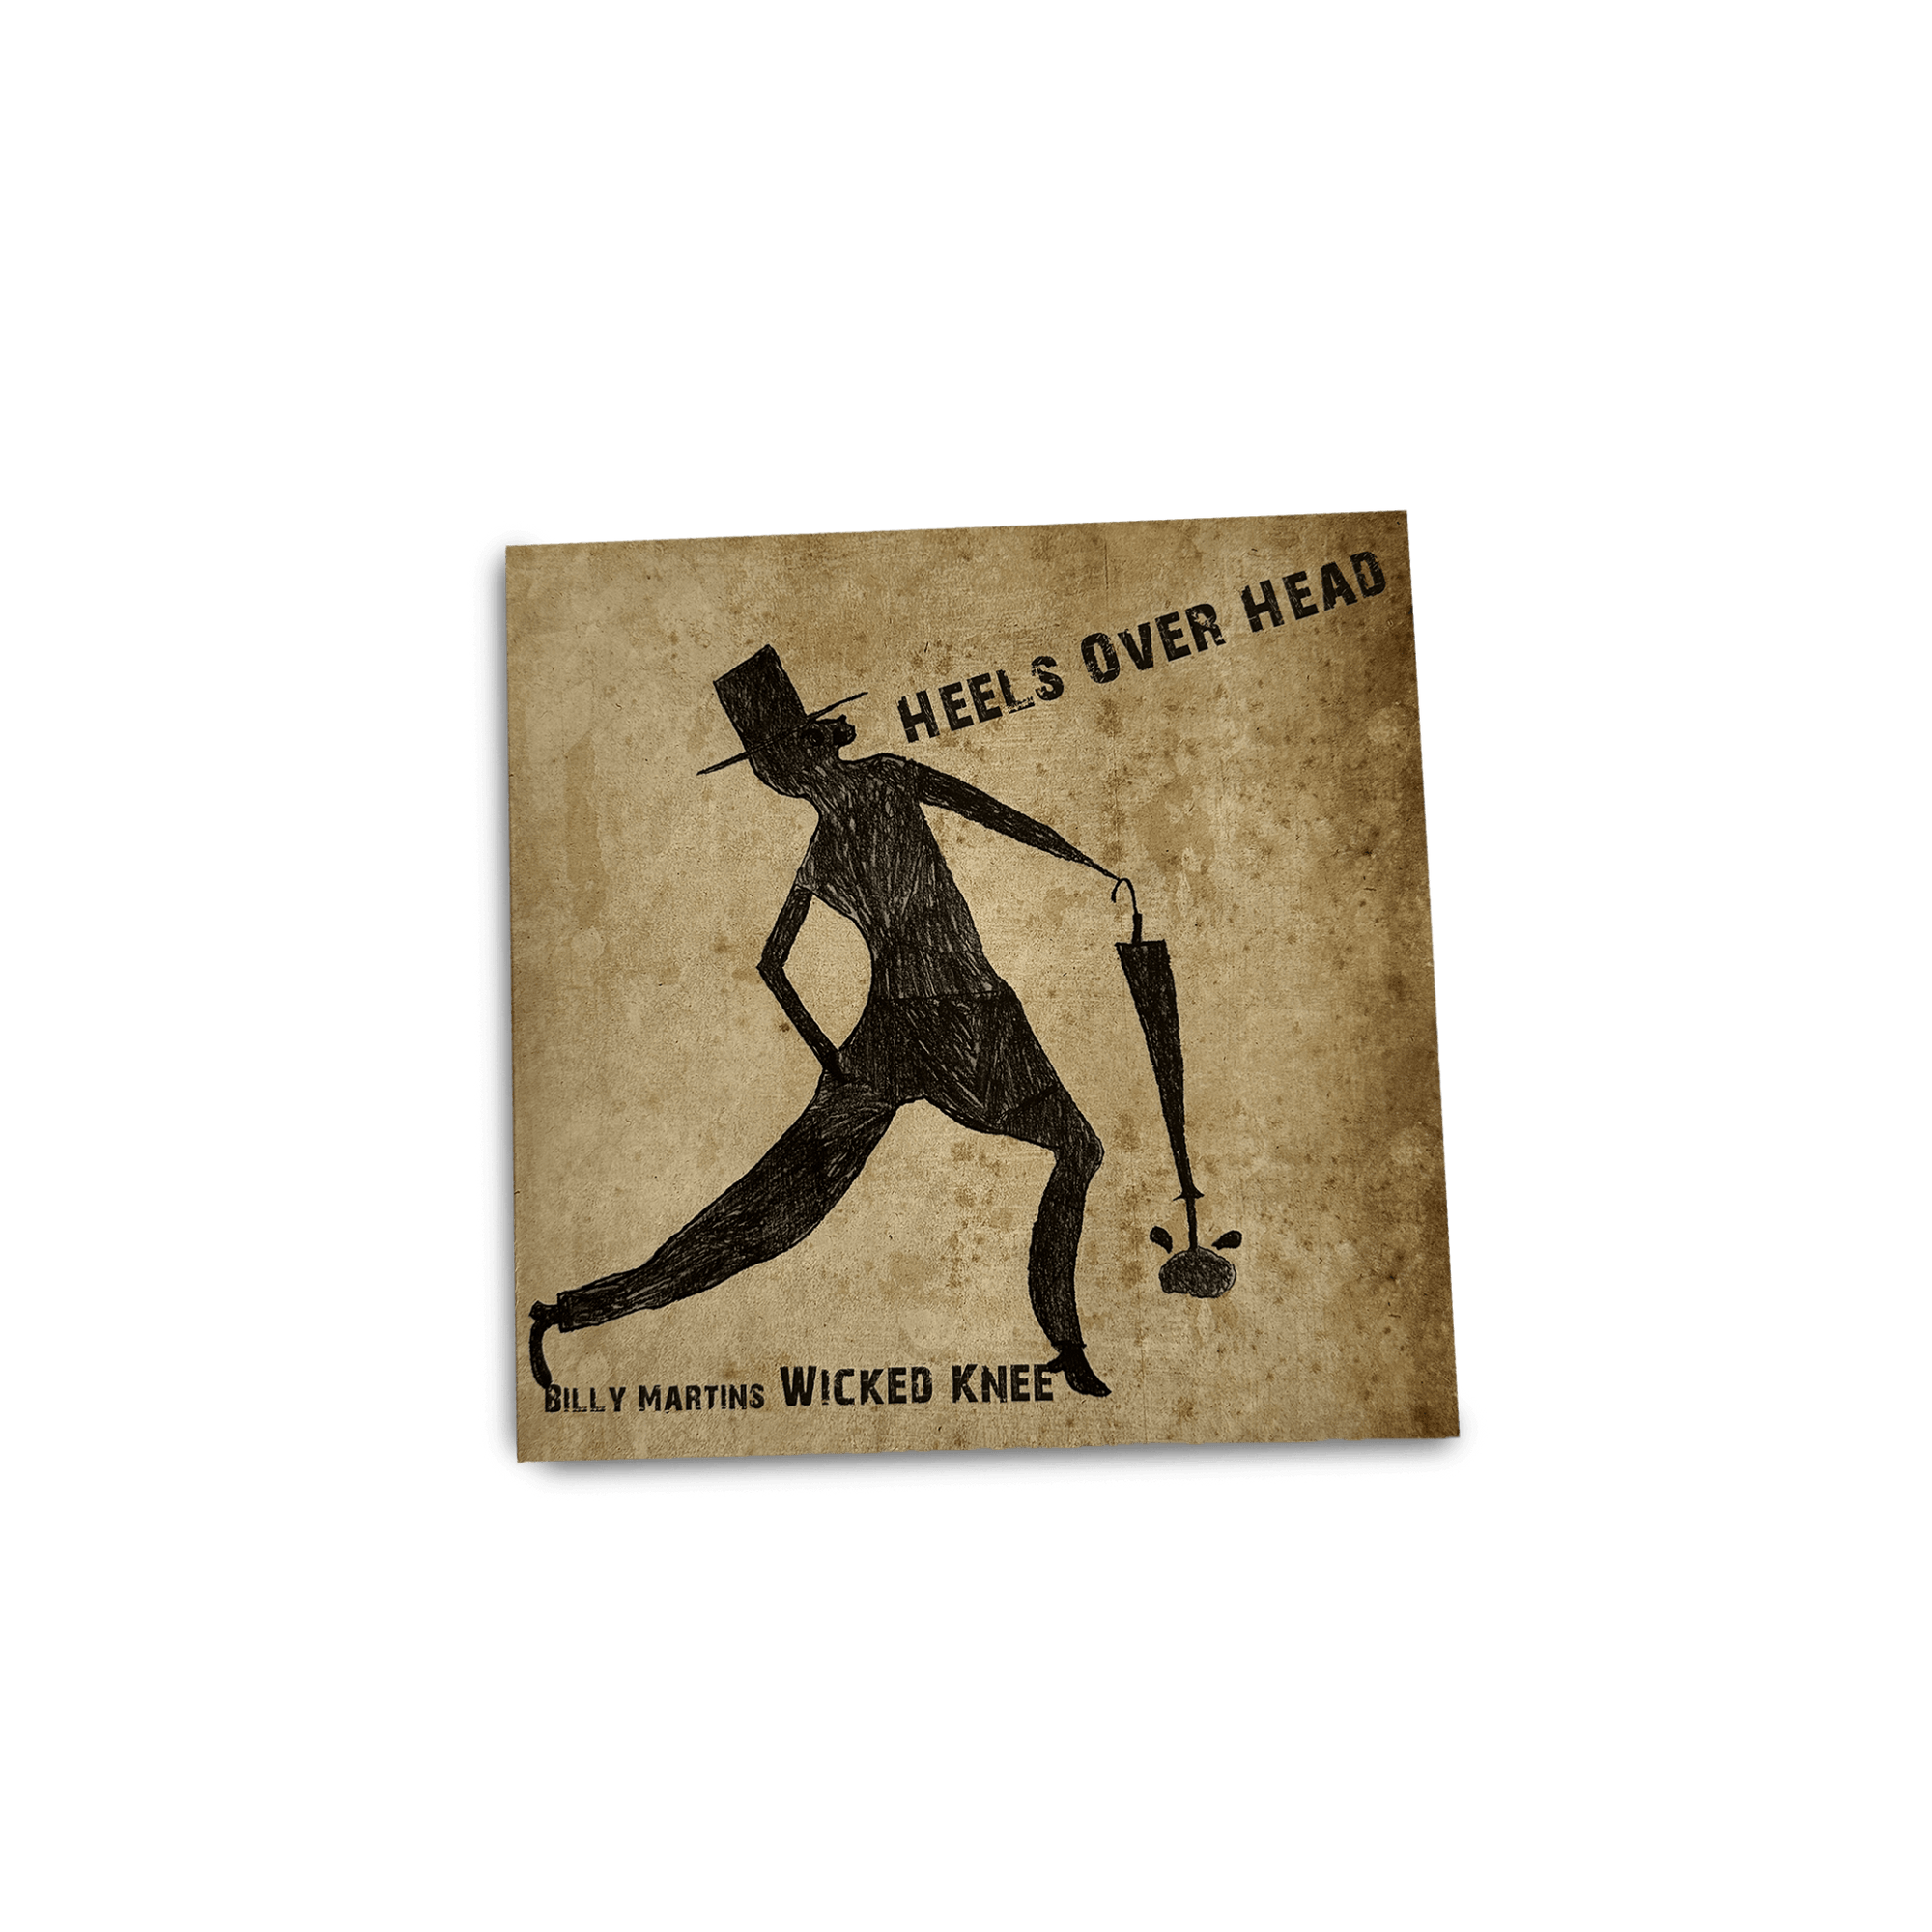 Billy Martins Wicked Knee - 'heels over head' Vinyl Record - grown&sewn